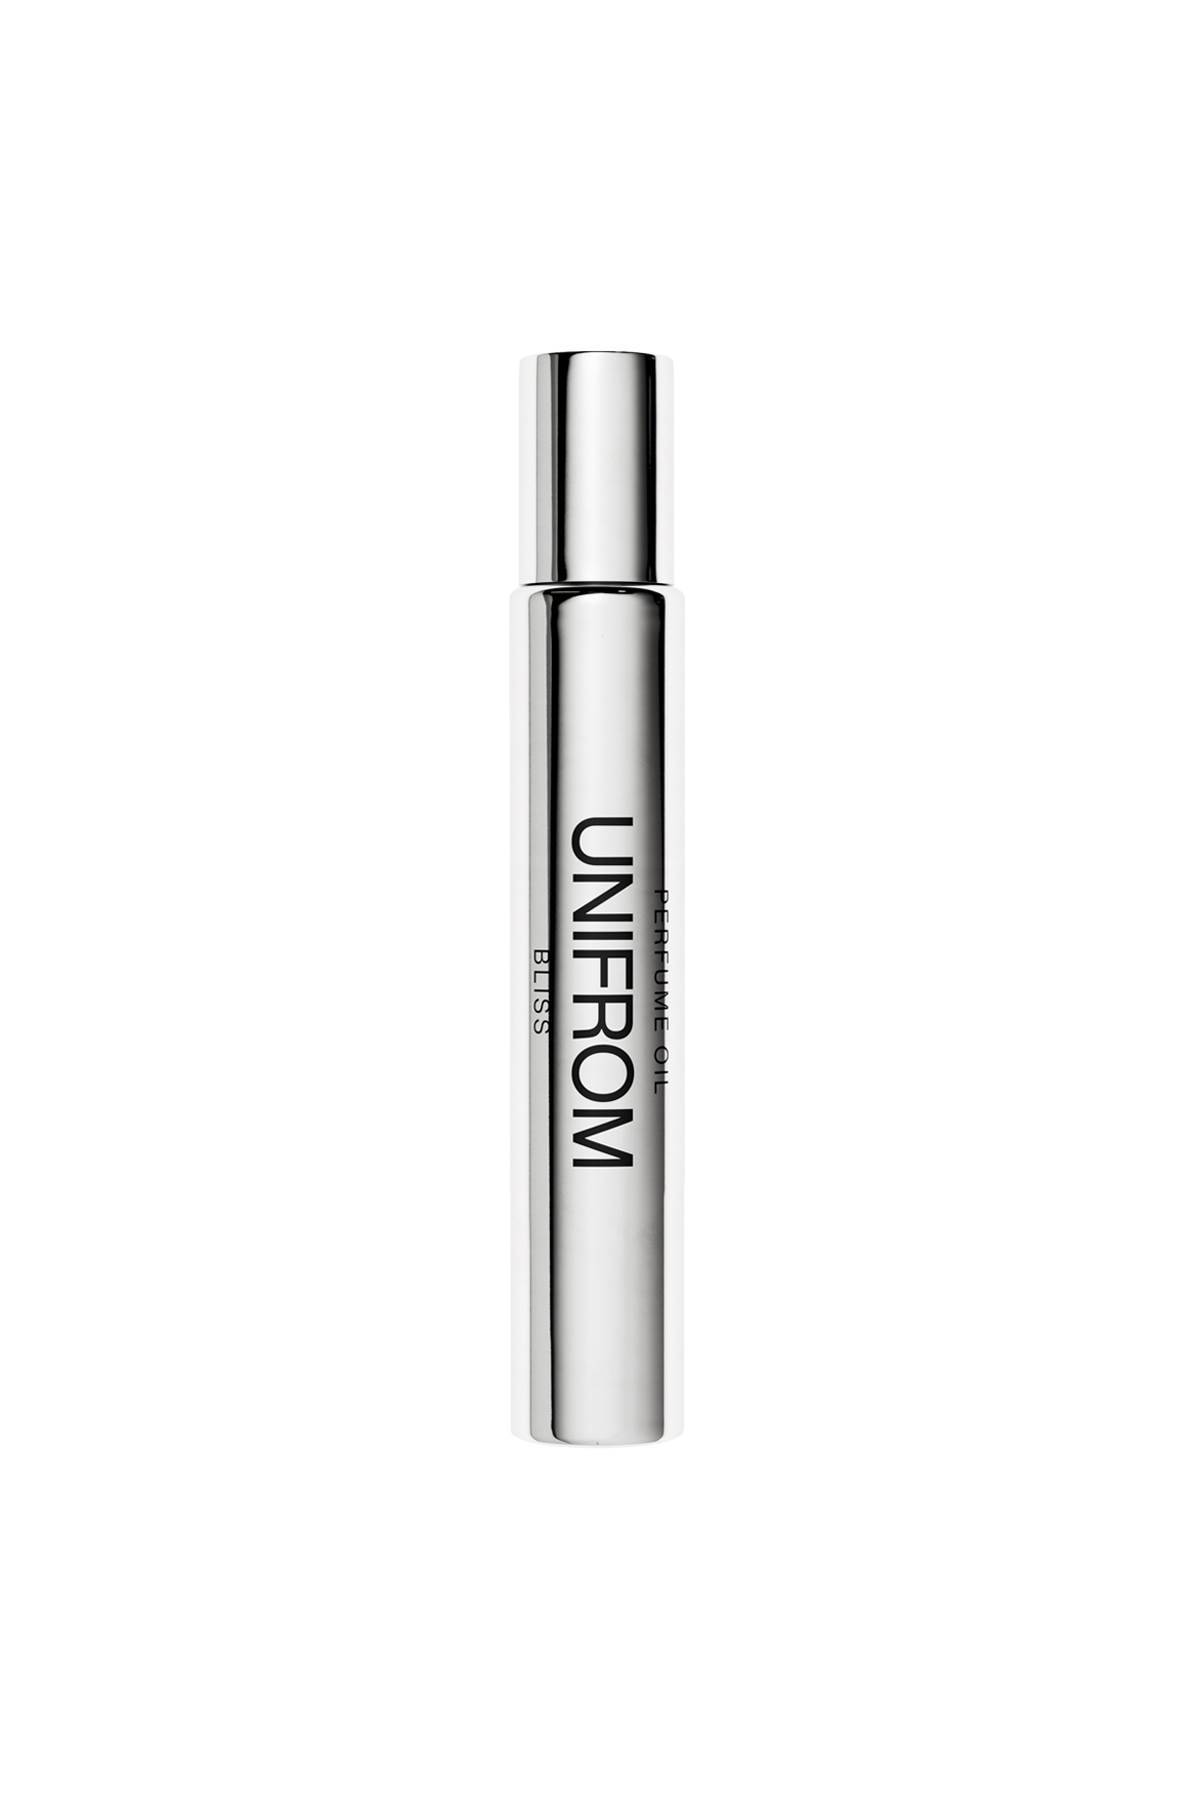 UNIFROM perfume oil bliss - 10ml